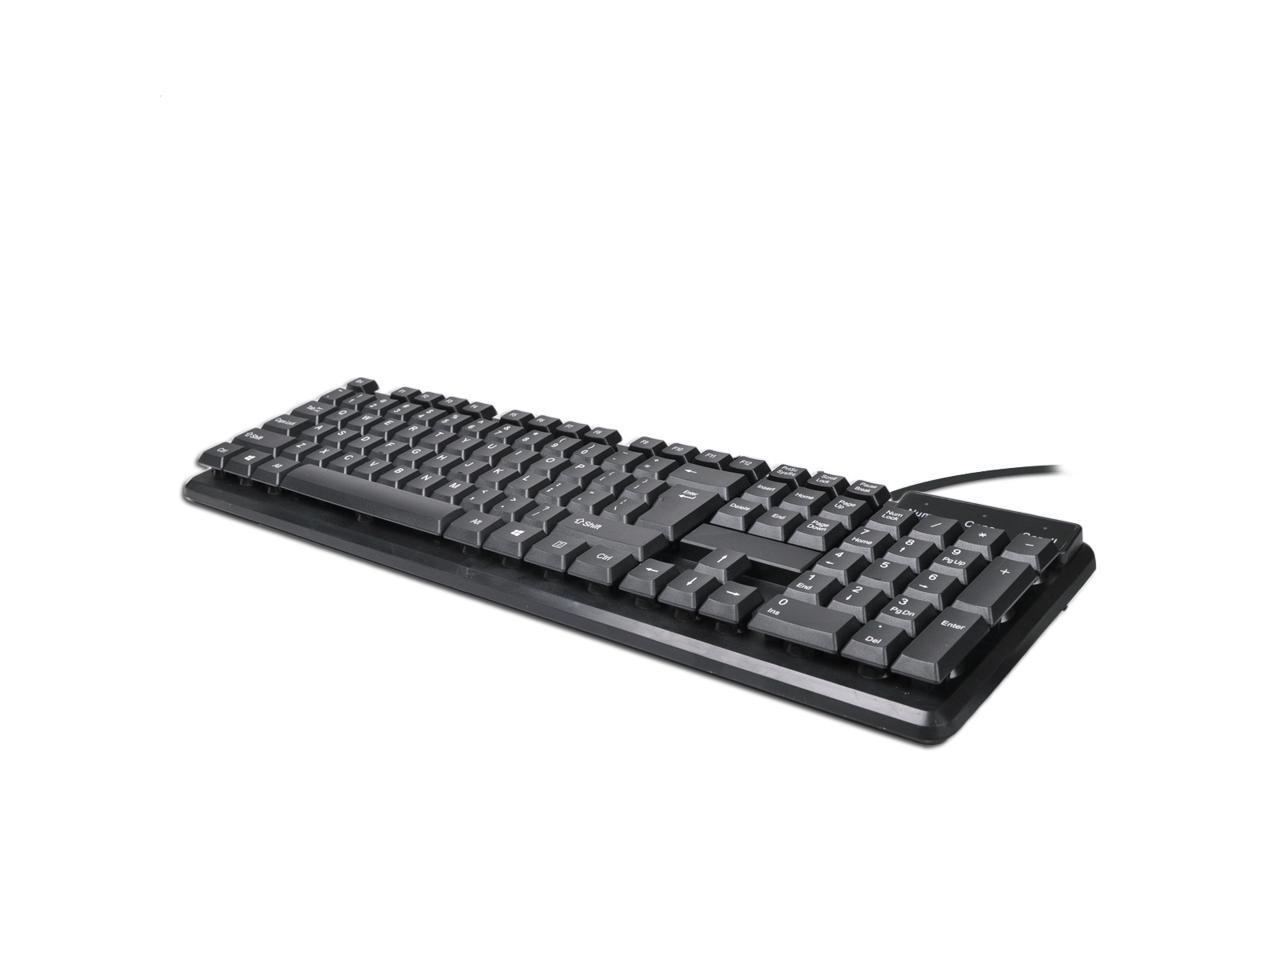 Imicro Kb-Us9813 104-Key Wired Usb Keyboard (English)